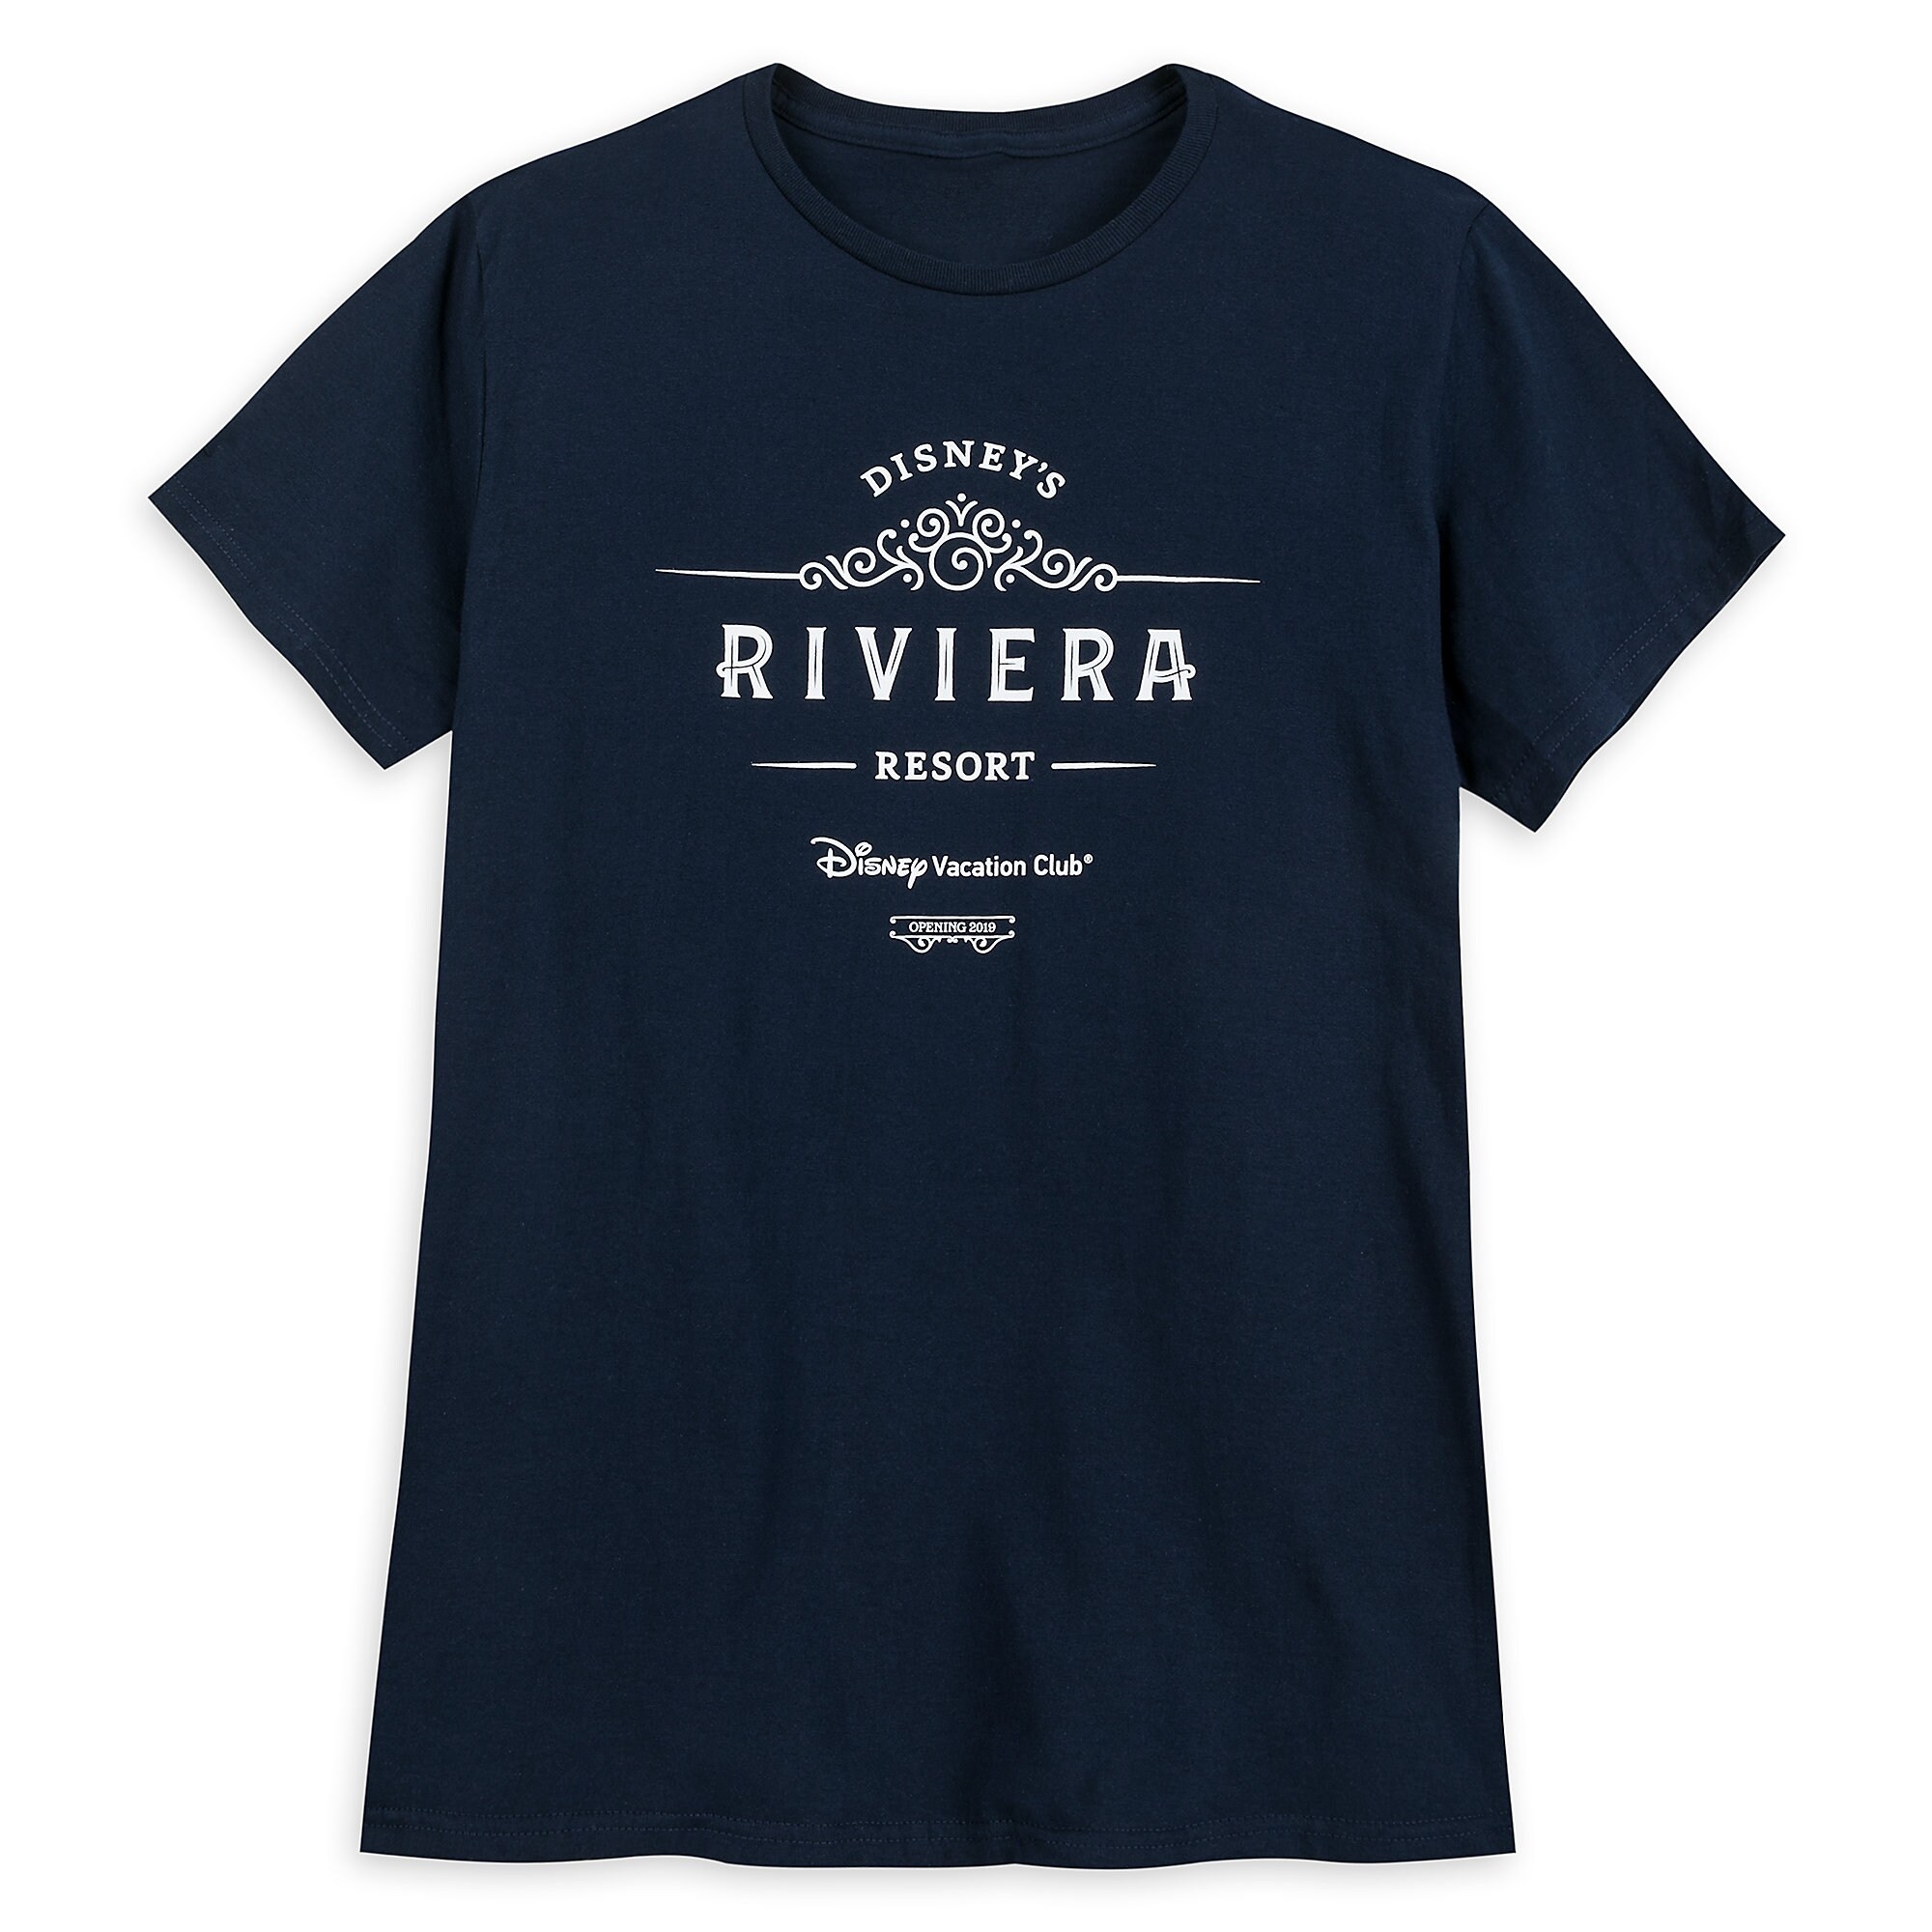 Disney's Riviera Resort T-Shirt for Adults - Disney Vacation Club